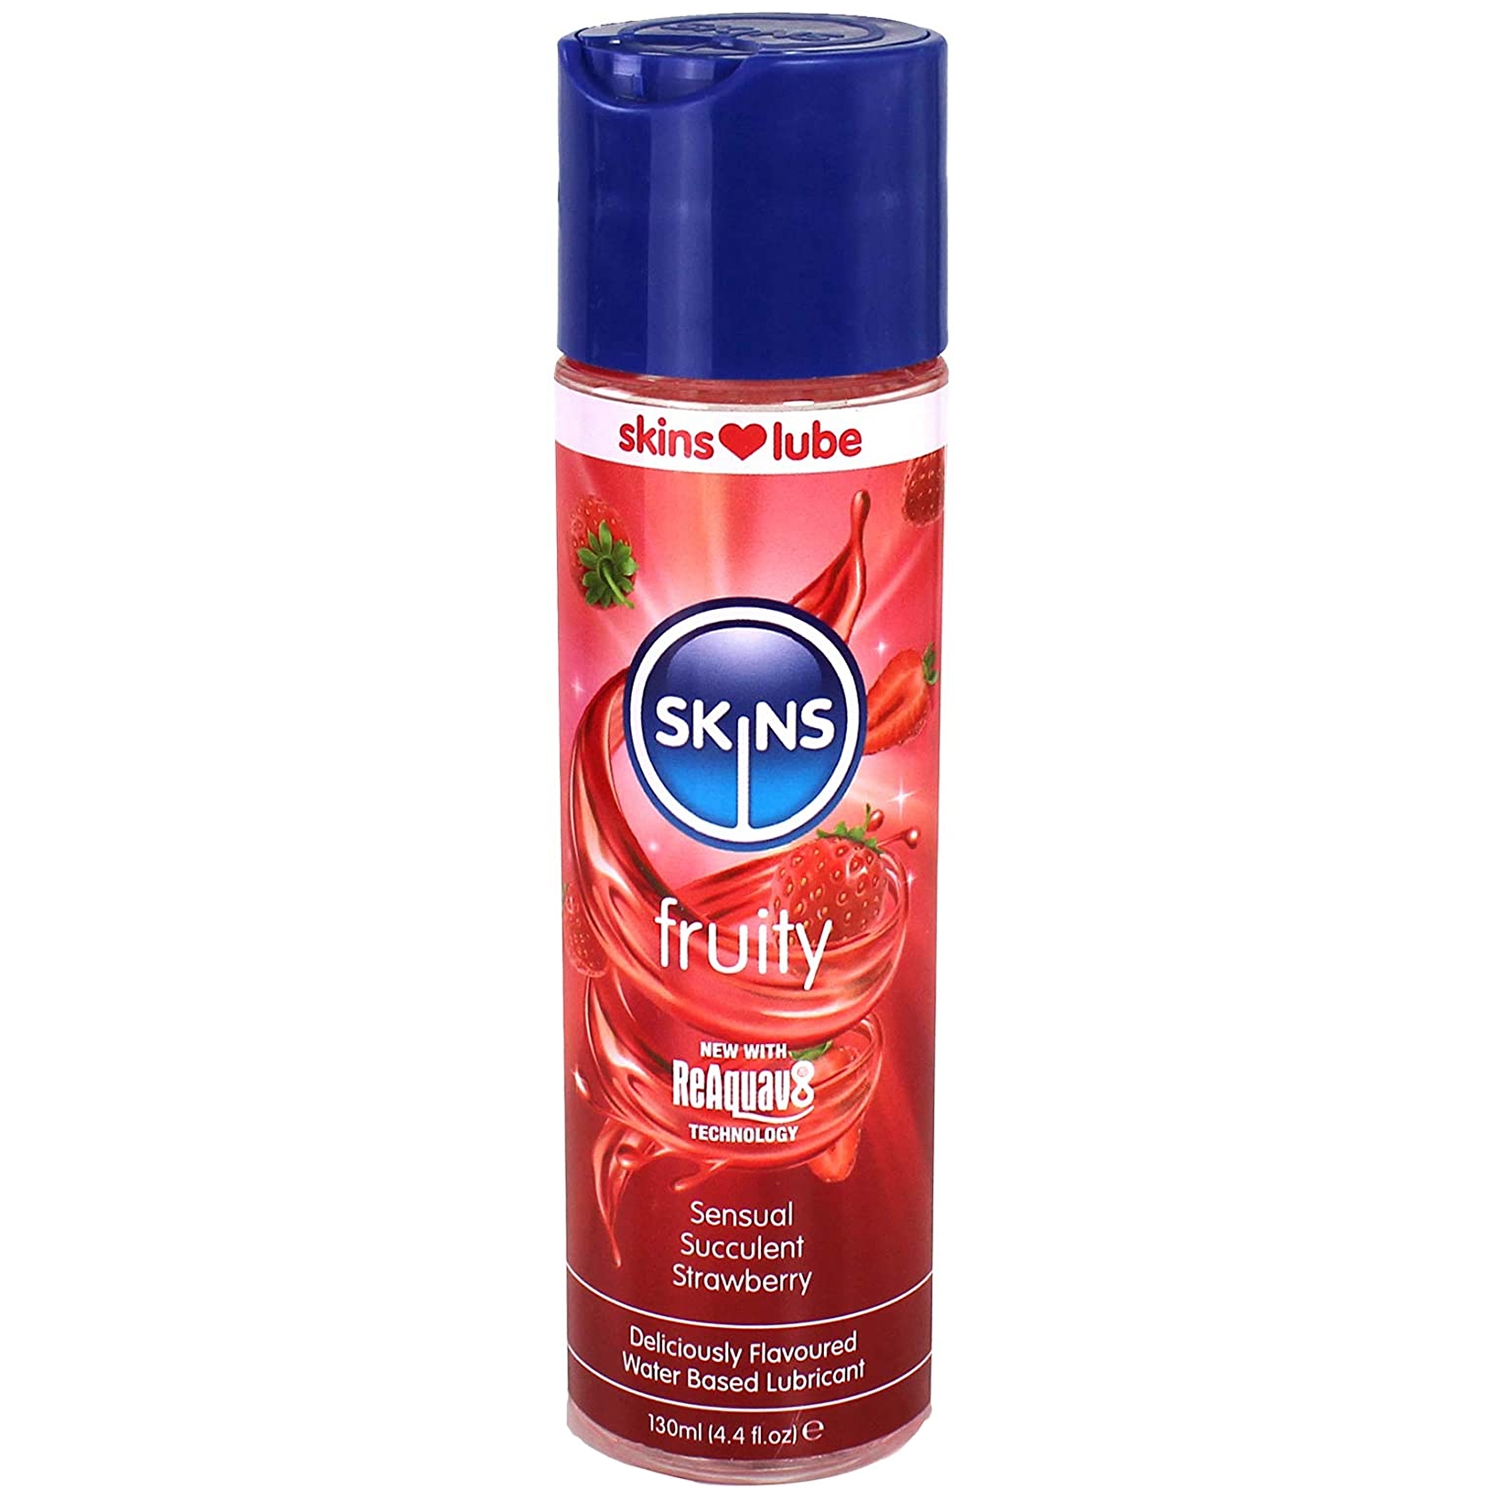 Skins Fruity Vandbaseret Glidecreme 130 ml     - Klar